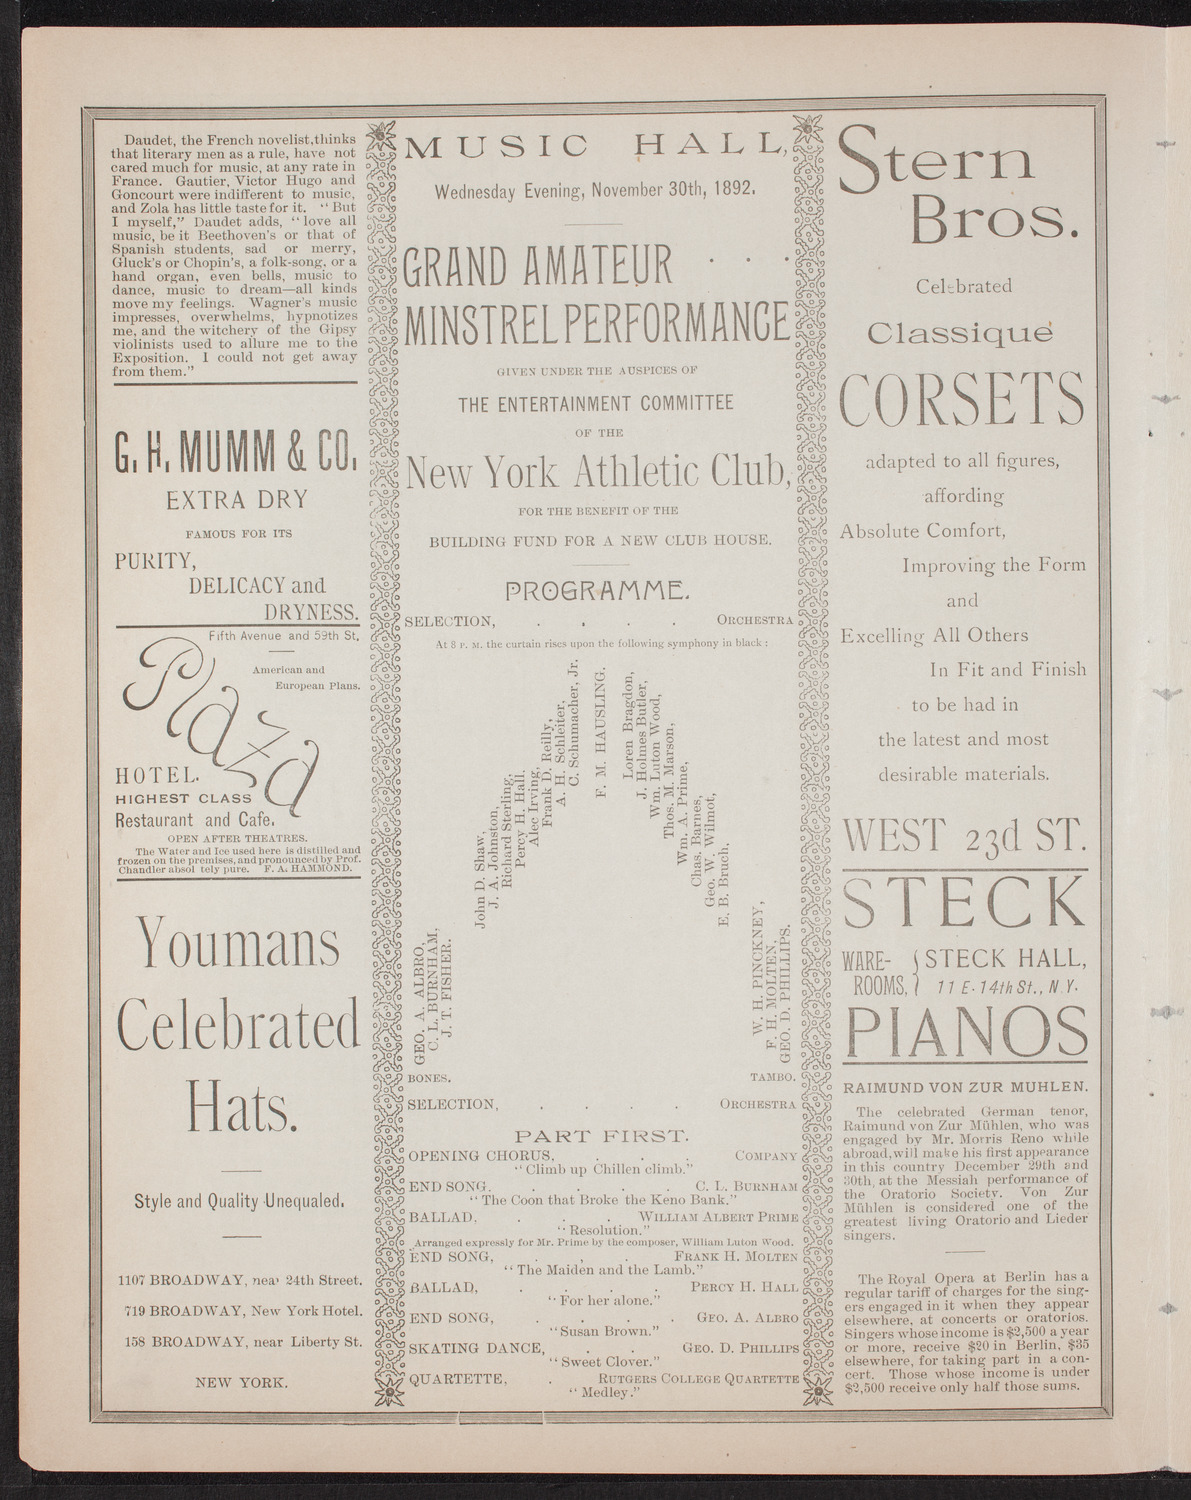 New York Athletic Club Minstrel Show, November 30, 1892, program page 4